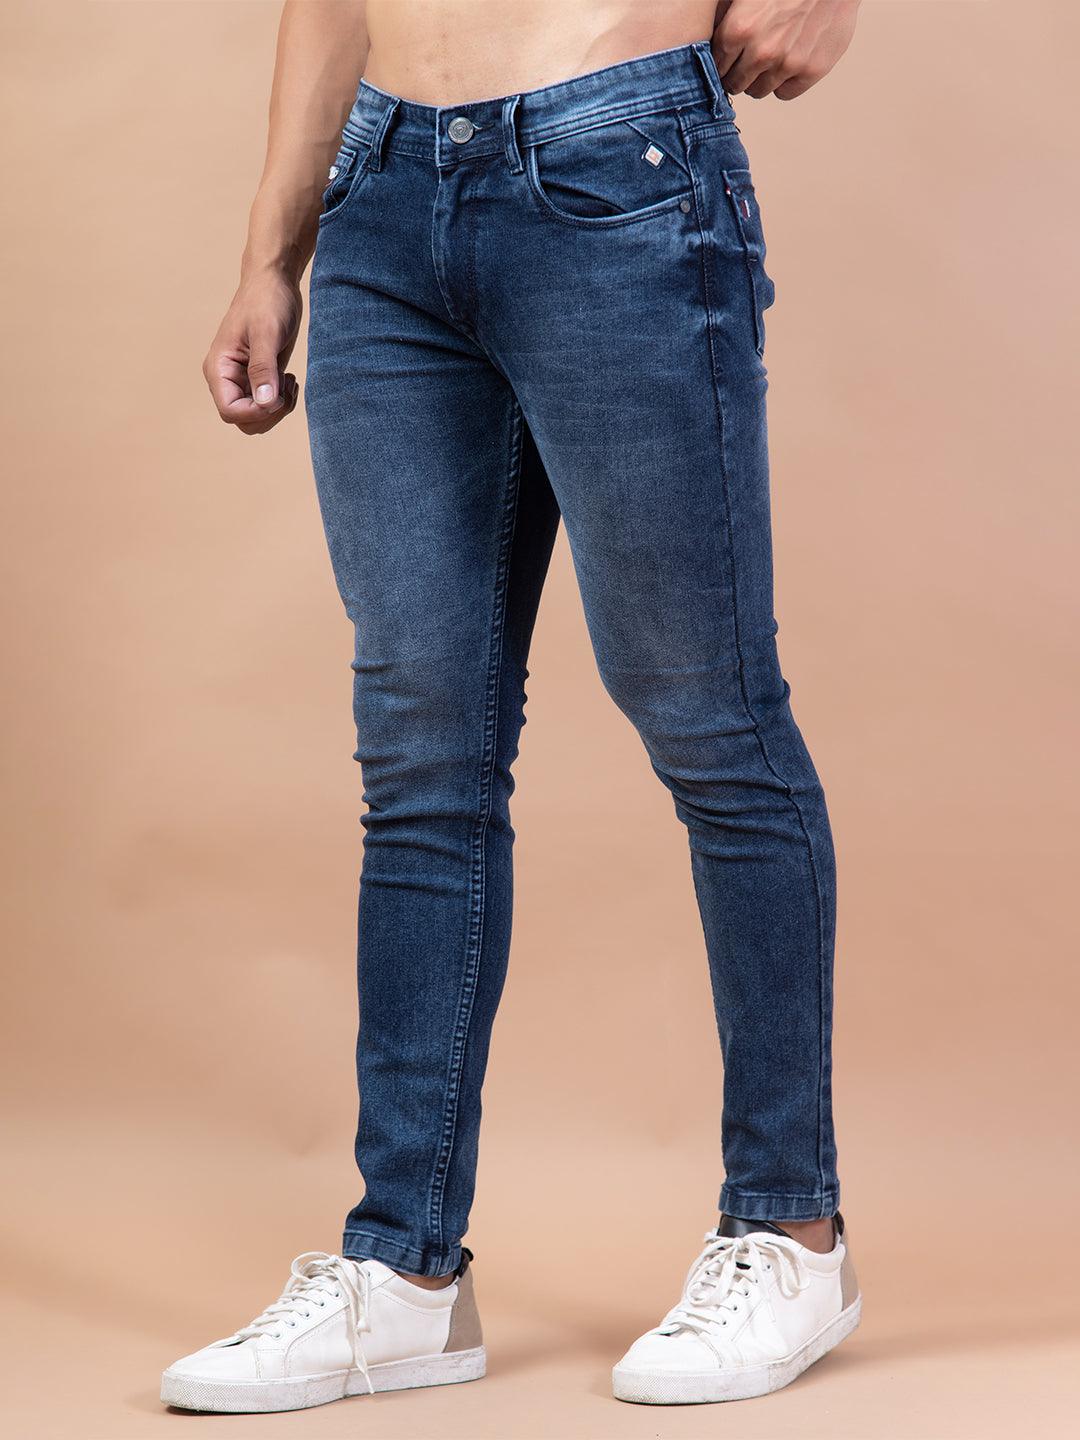 Men's Blue Street Style Hip Hop Baggy Jeans - RippedJeans® Official Site |  Jeans outfit men, Blue jeans outfit men, Jeans style